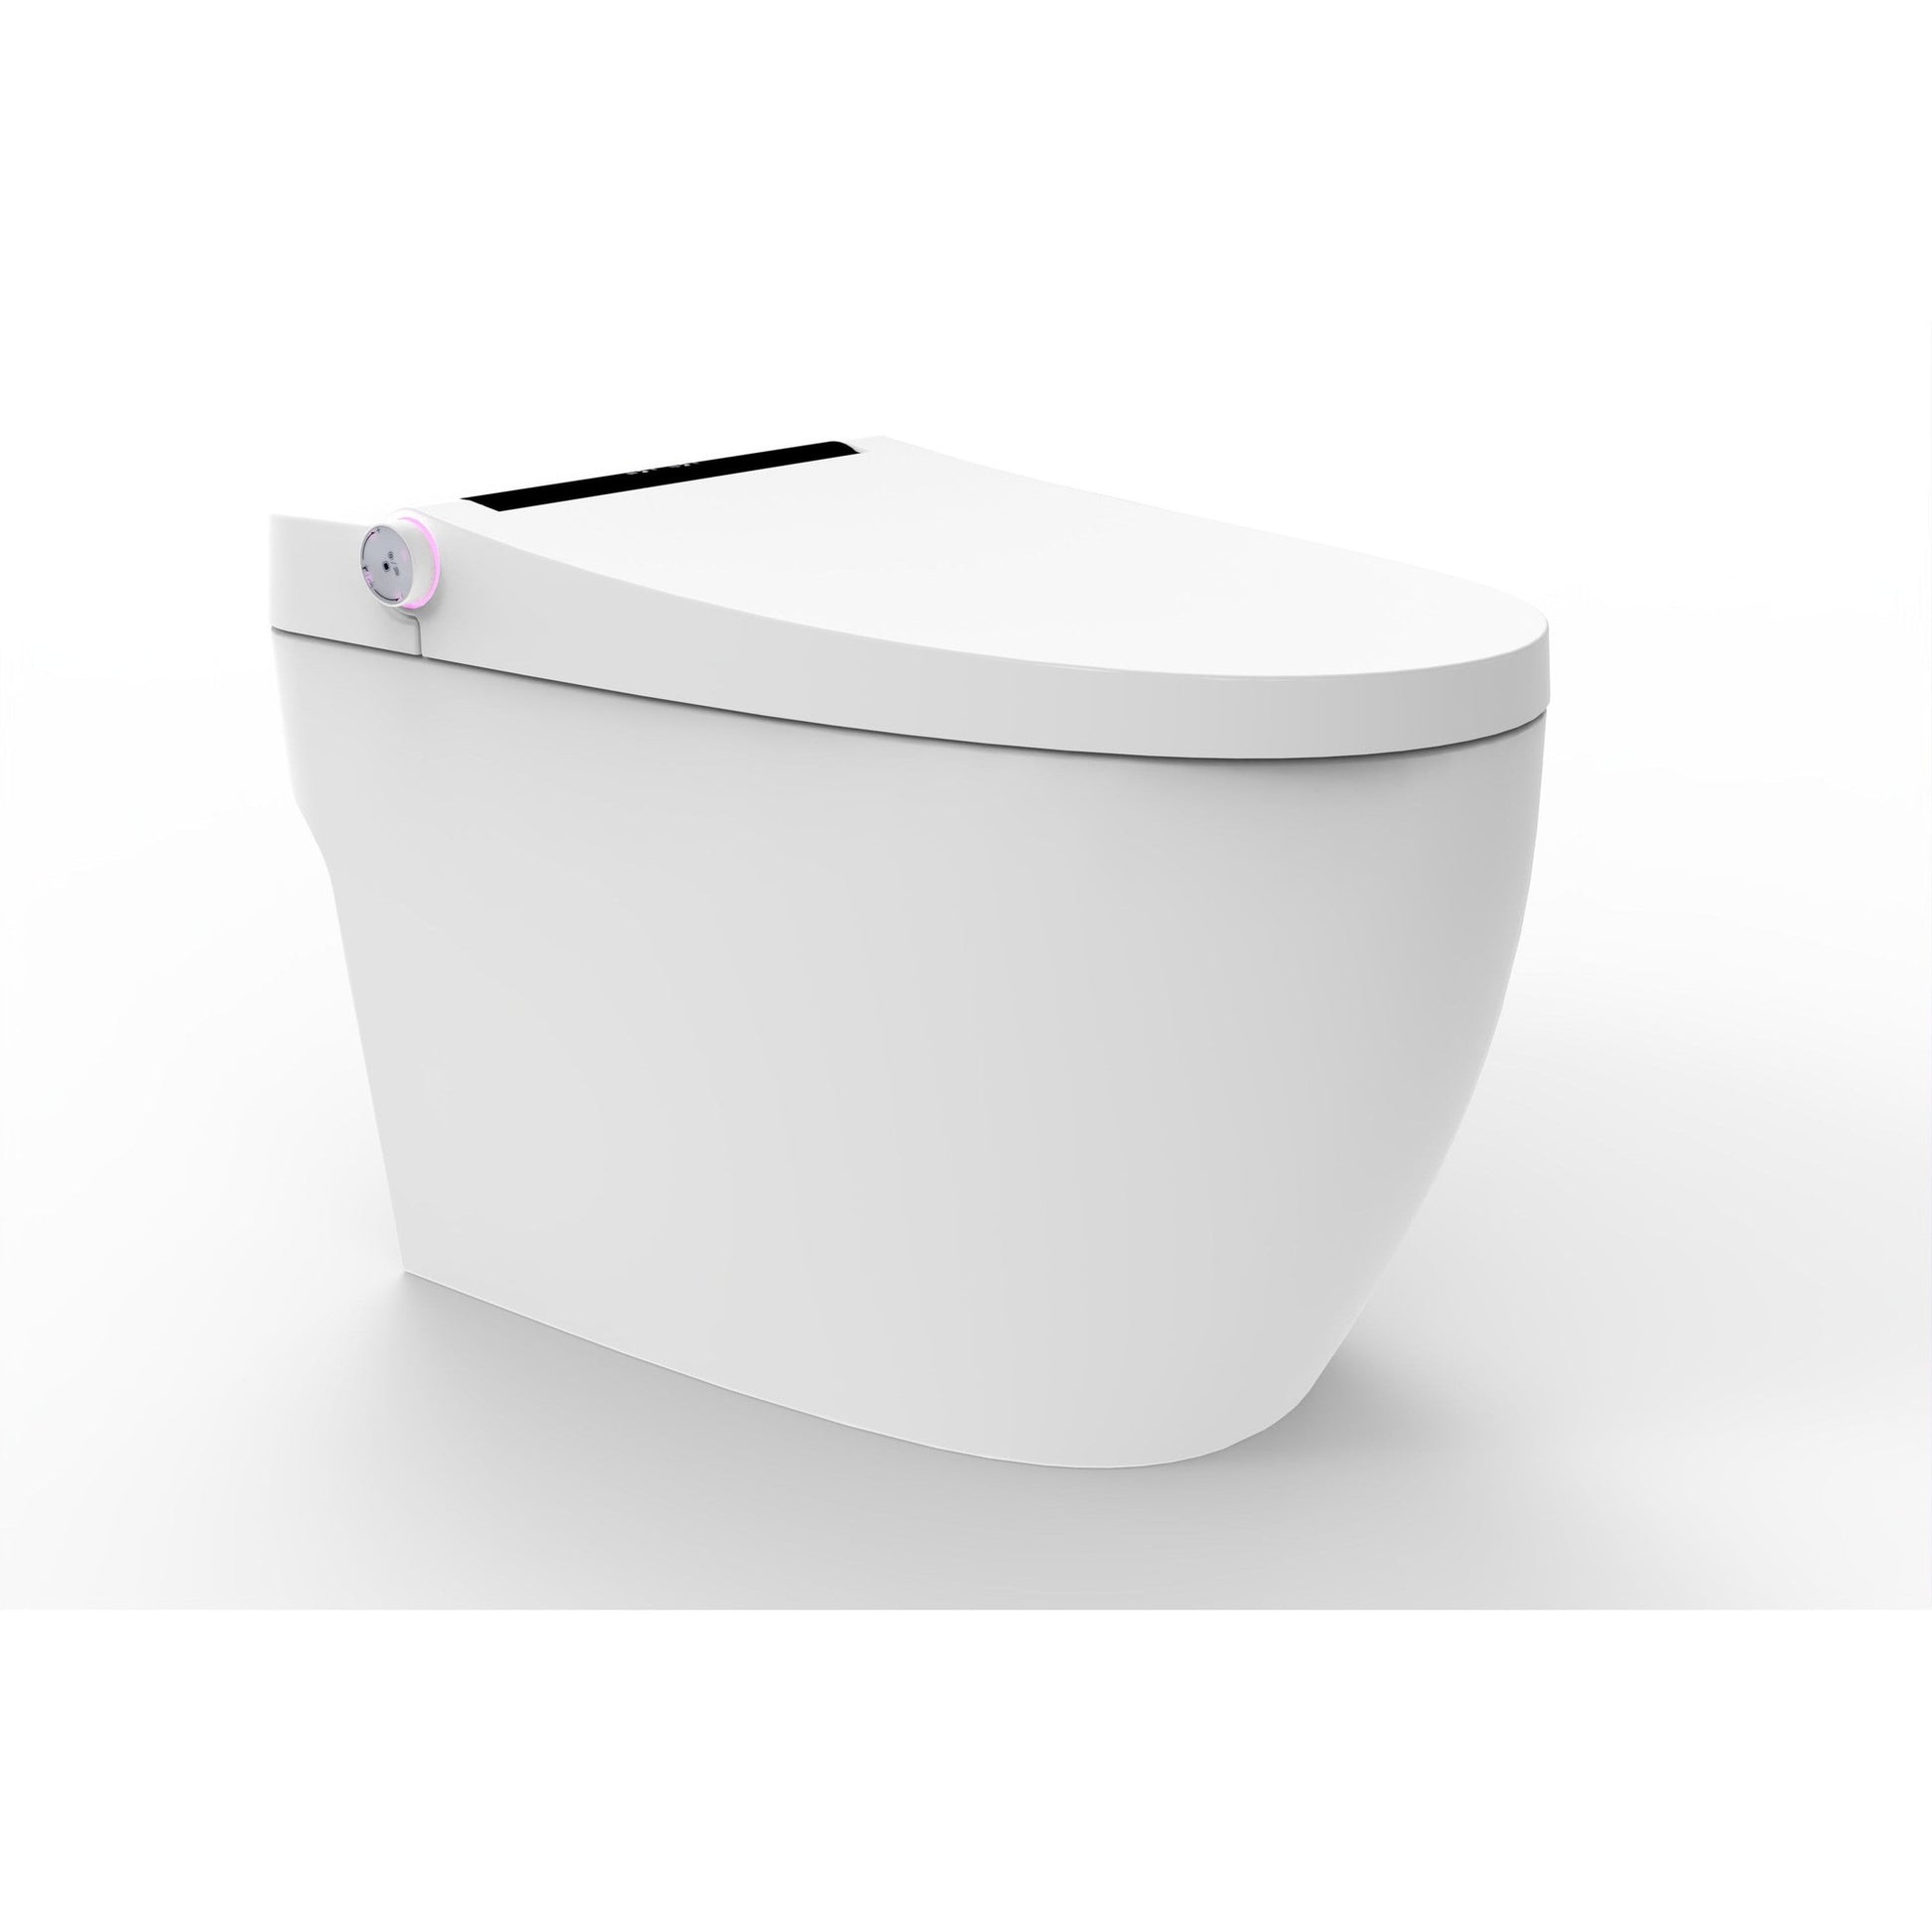 Castello USA Angeles White Smart Toilet With Bidet and LED Display